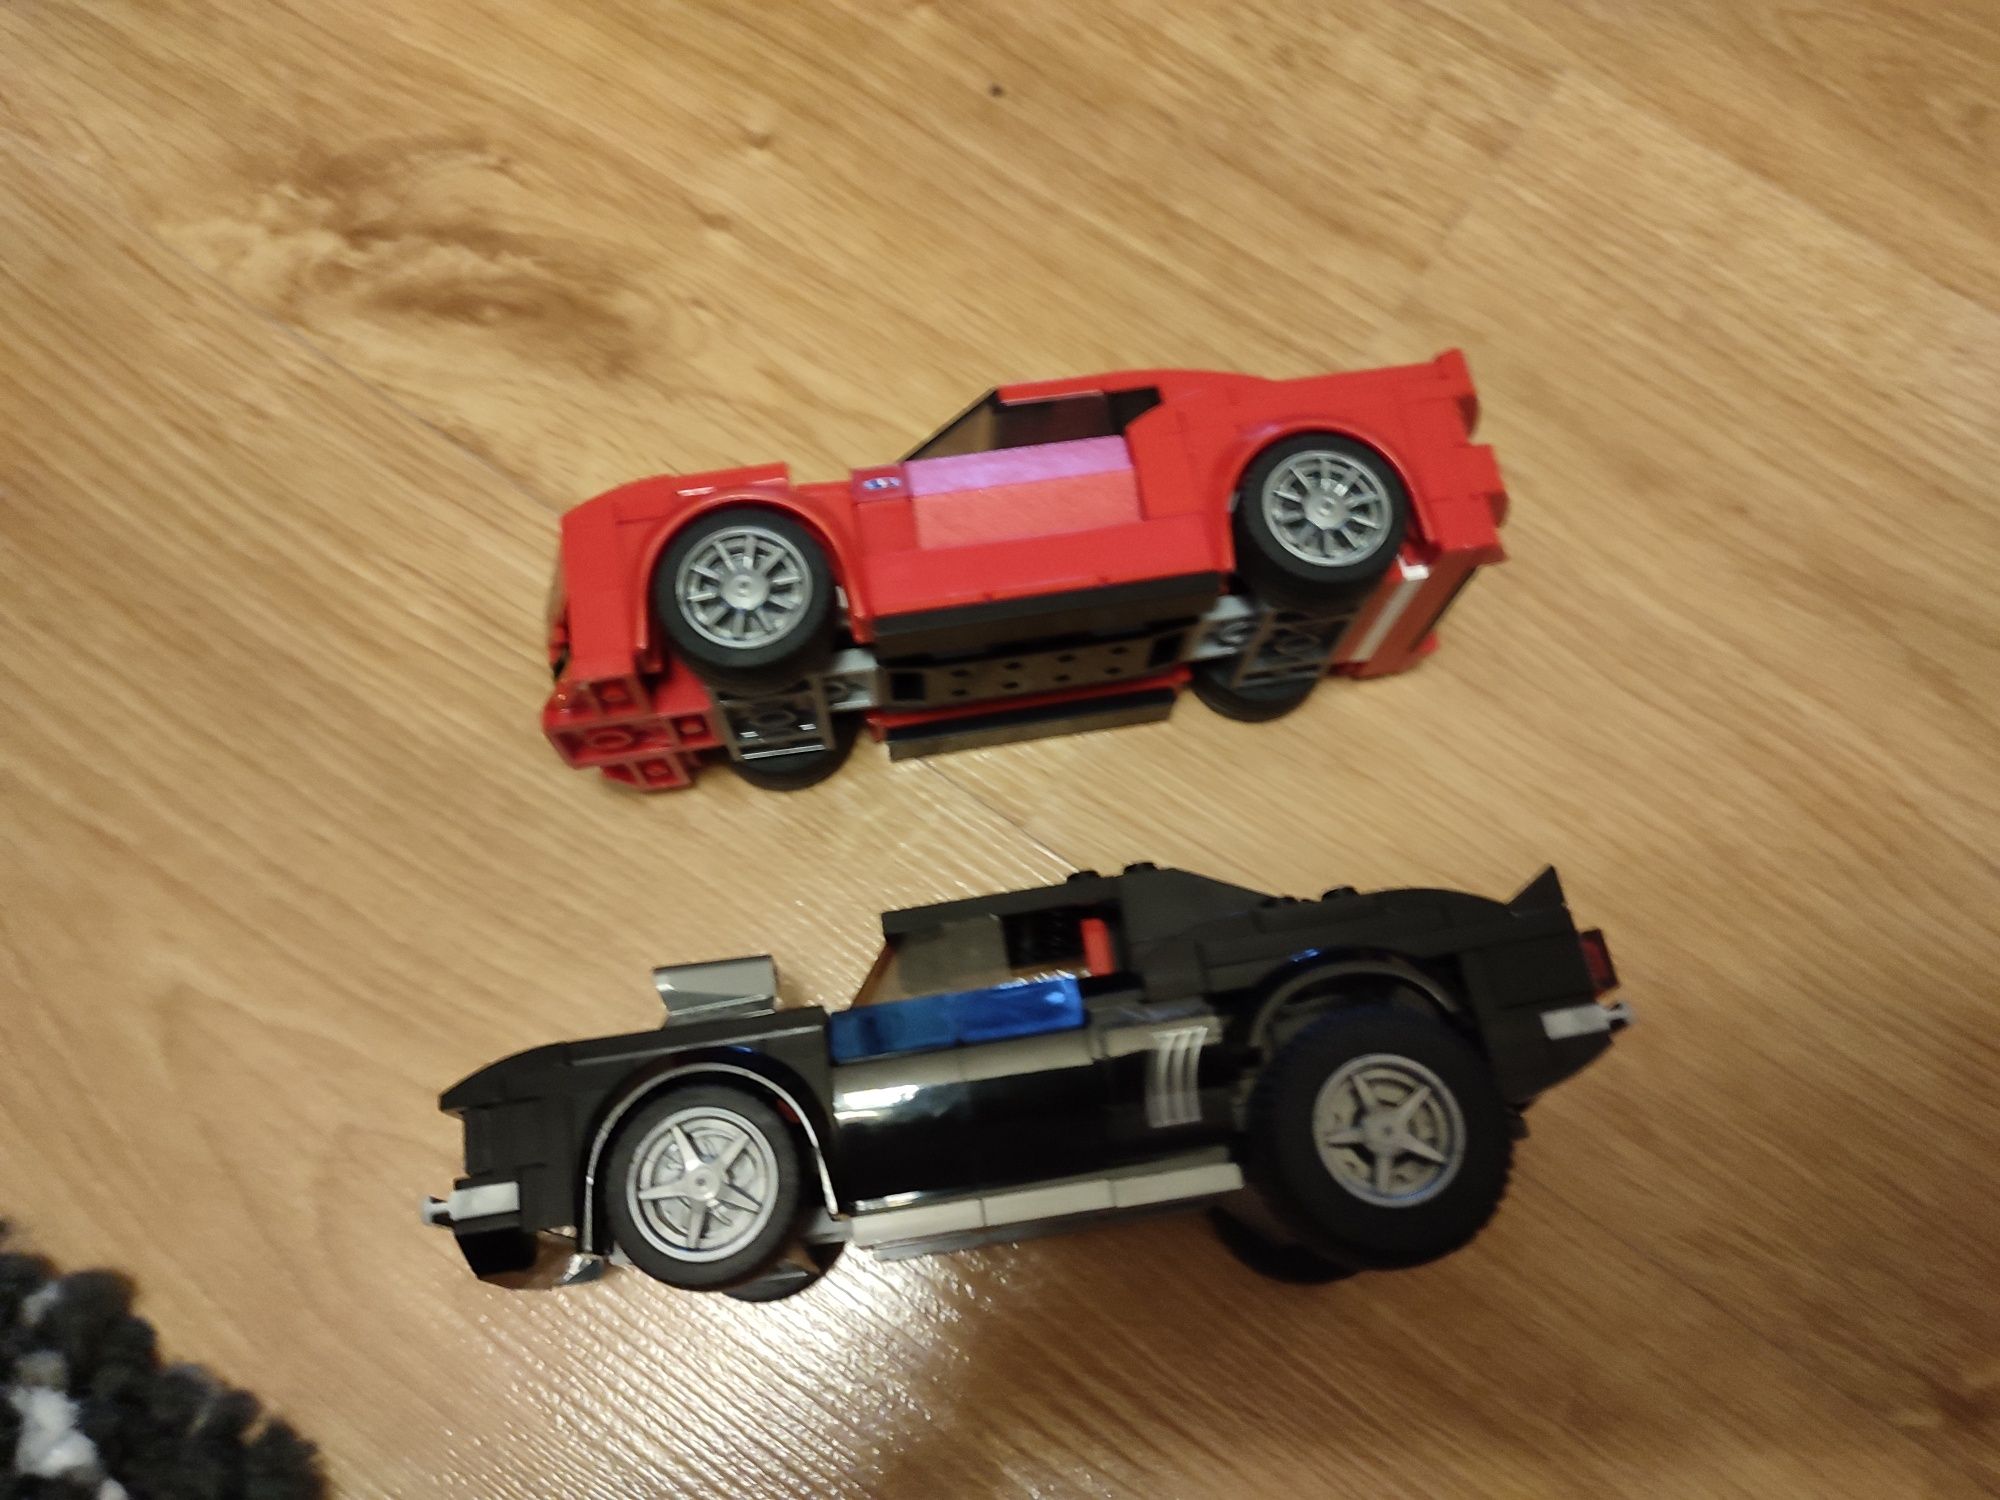 Lego Camaro race